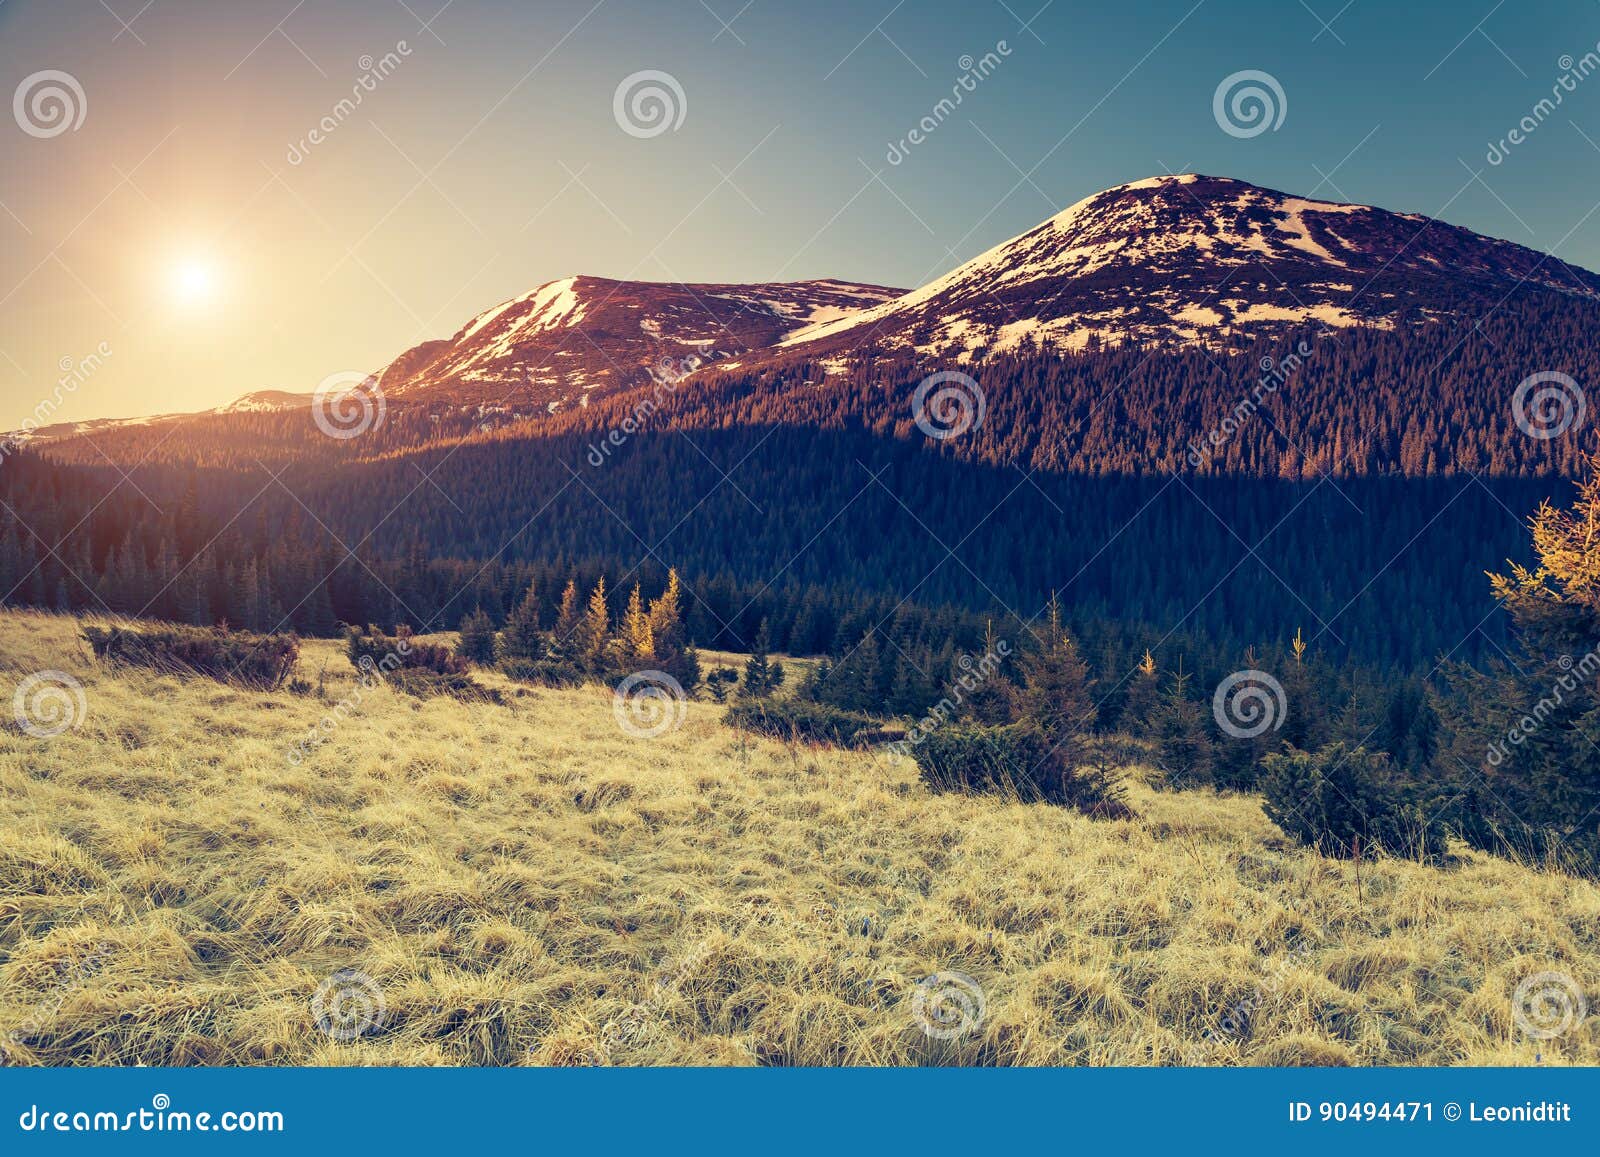 Magical Mountains Landscape Stock Image Image Of Adventure Cloud